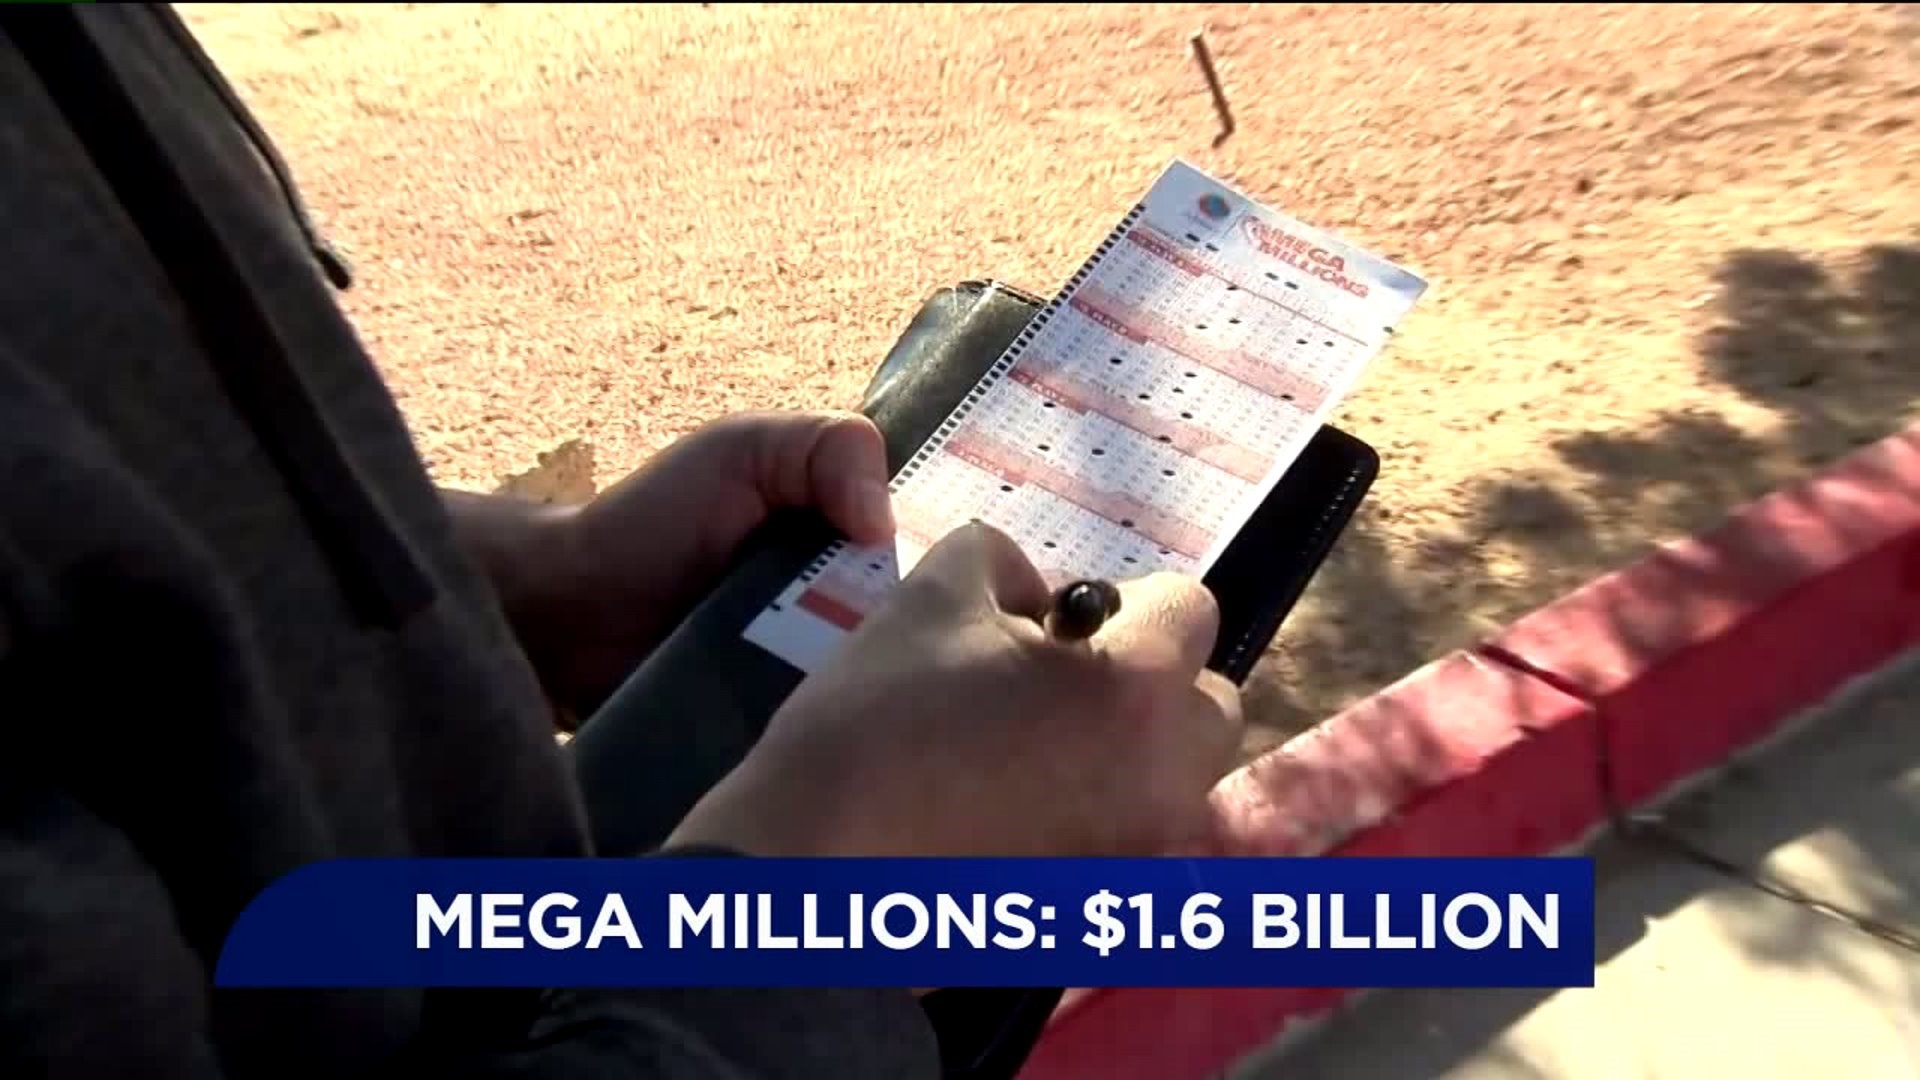 Mega Millions Now $1.6 Billion, Biggest Jackpot in History